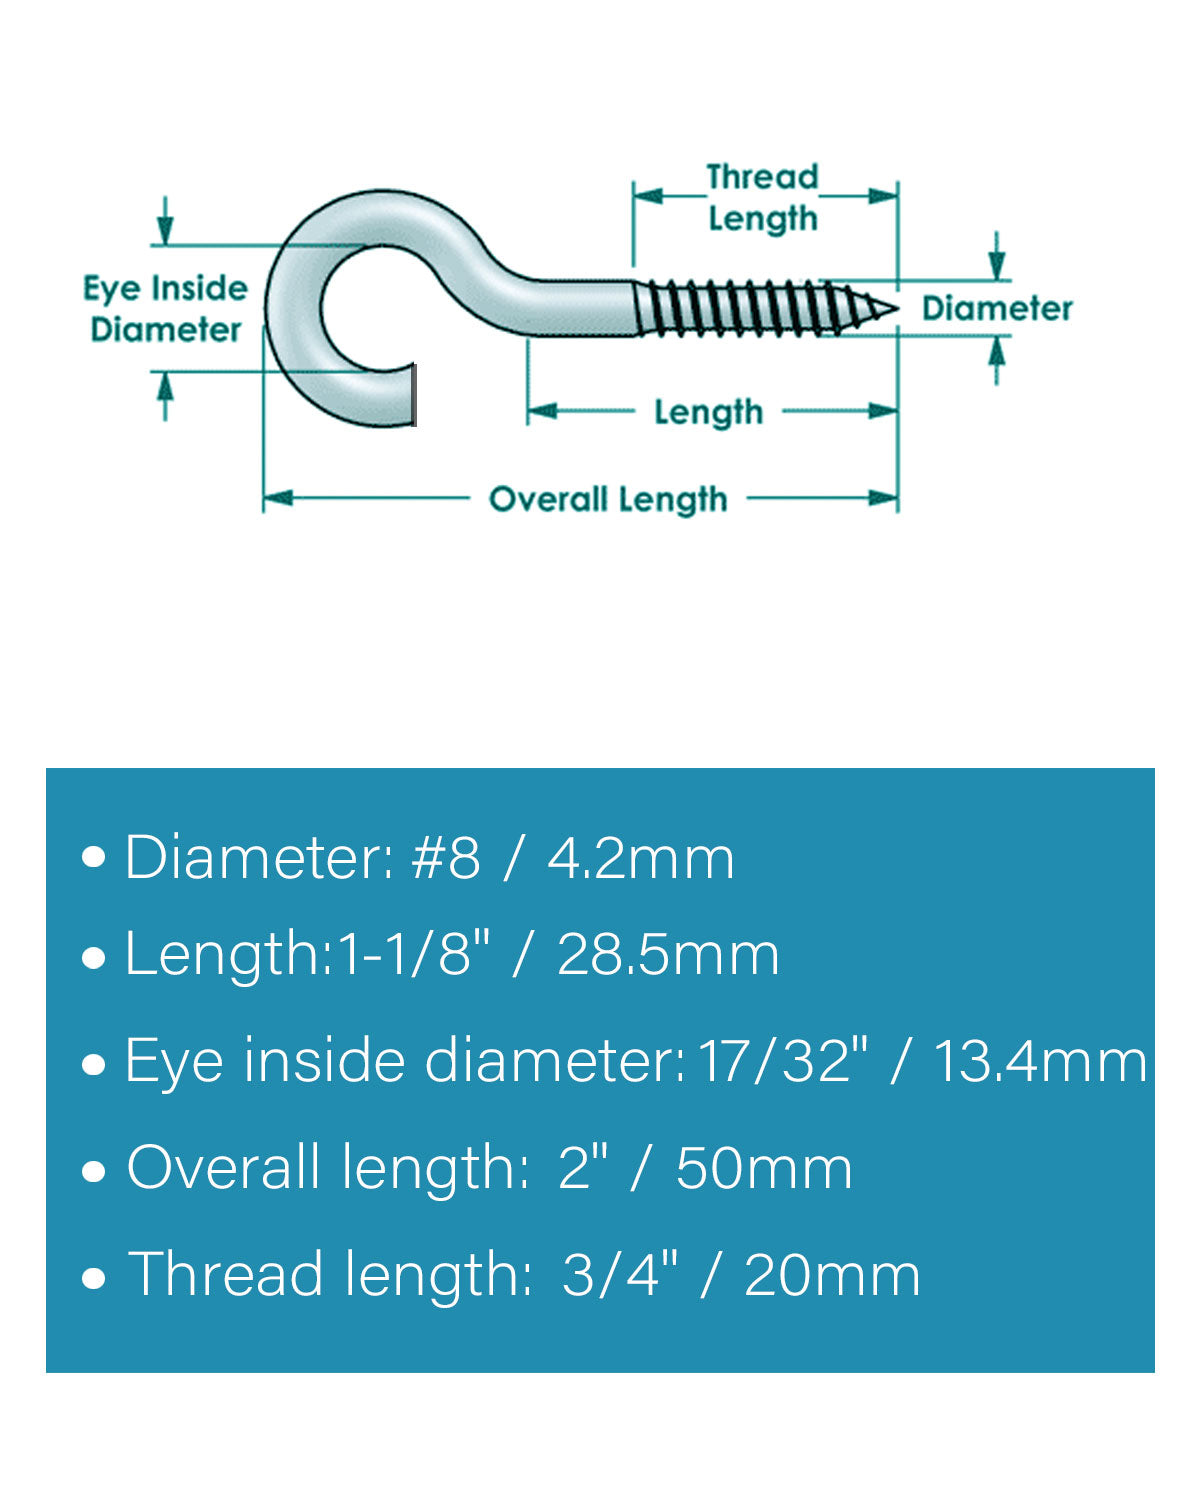 Stainless Steel Large Eye Screws Two Pack (2) 2-7/8 inch Lq-b75513g-ss-u